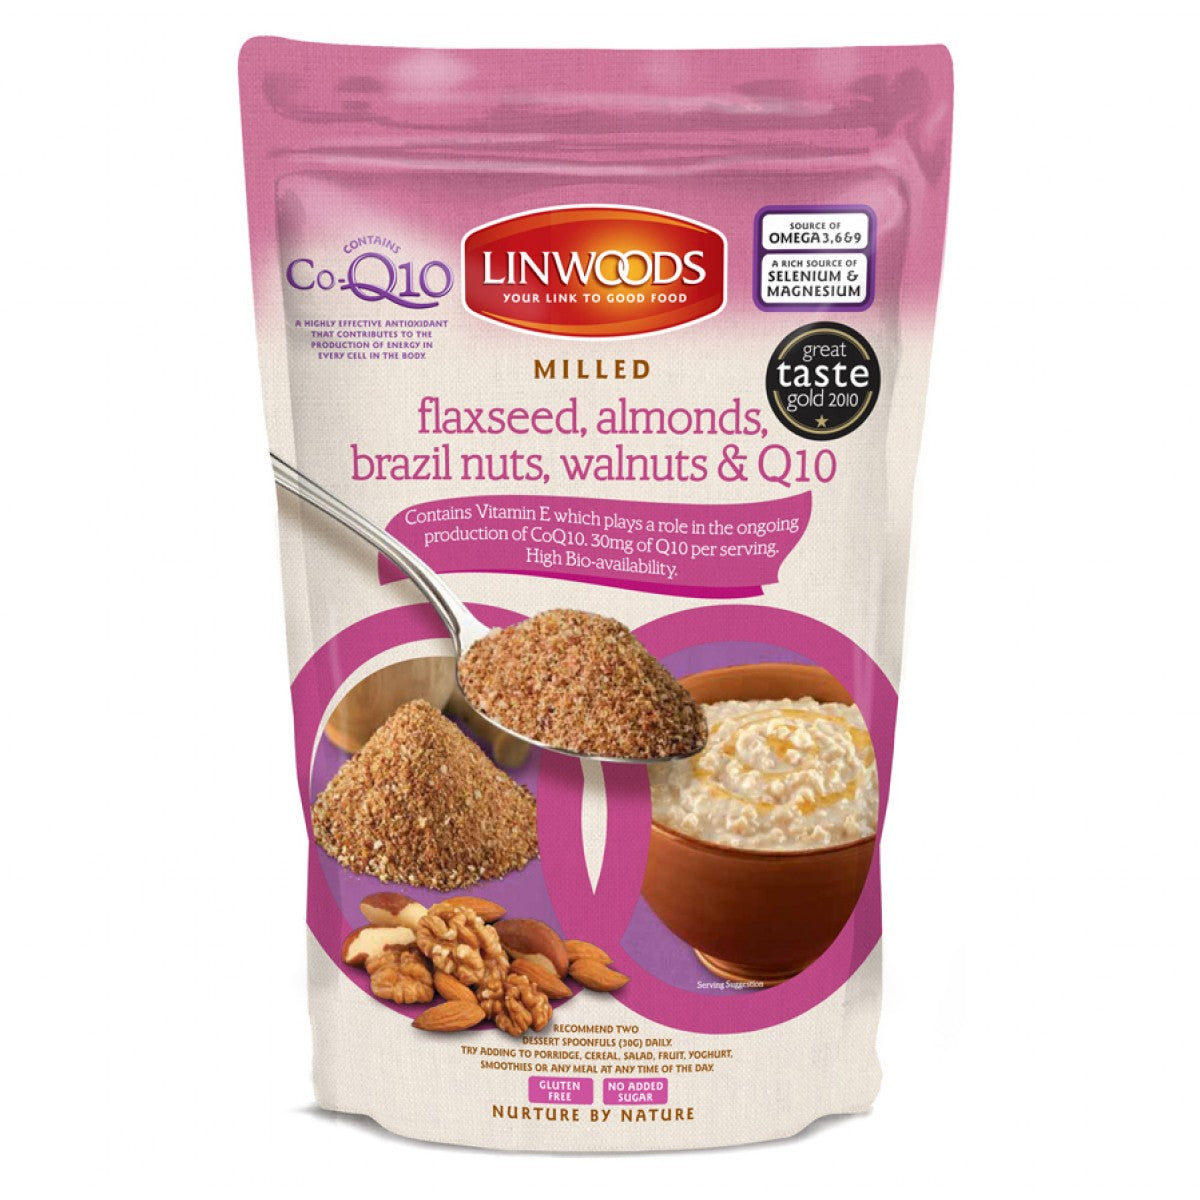 Linwoods Milled Flaxseed, Almonds, Brazil nut, Walnuts & Q10 200g - Just Natural